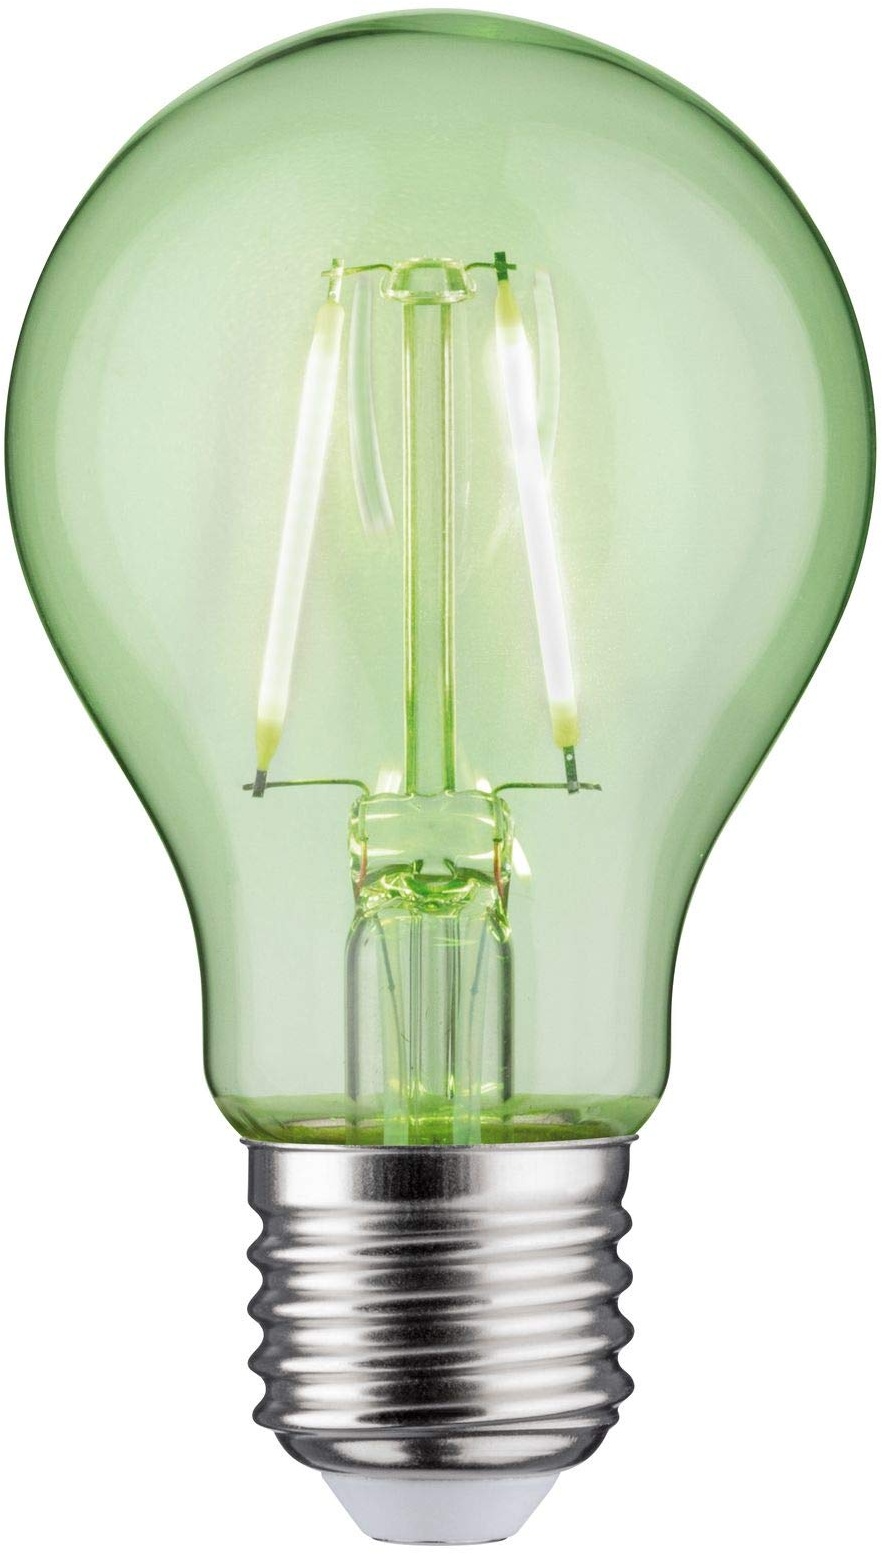 Paulmann 28724 LED Lampe Standardform 1,1W Leuchtmittel Grün Beleuchtung Glas Licht 4900K E27